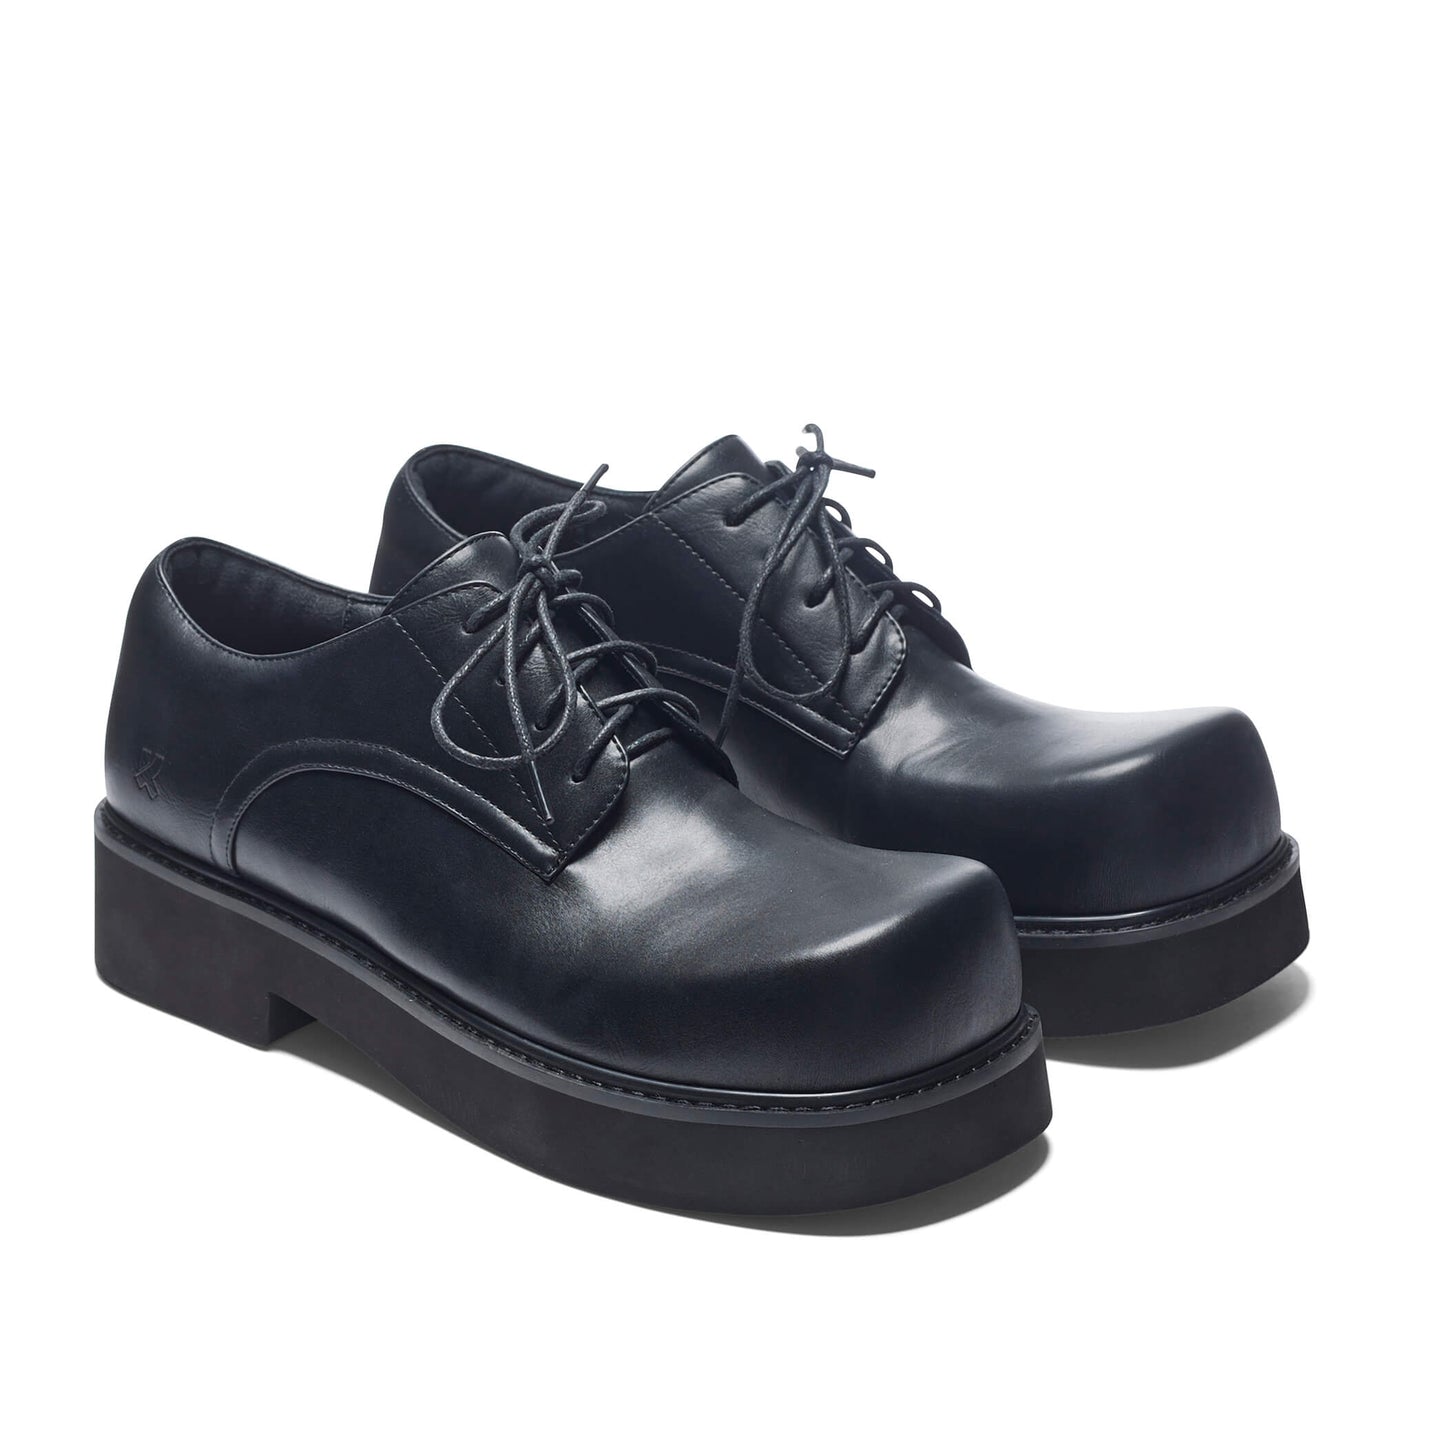 400% Oversized Men's Derby Shoes - Black - Koi Footwear - Three-Quarter View